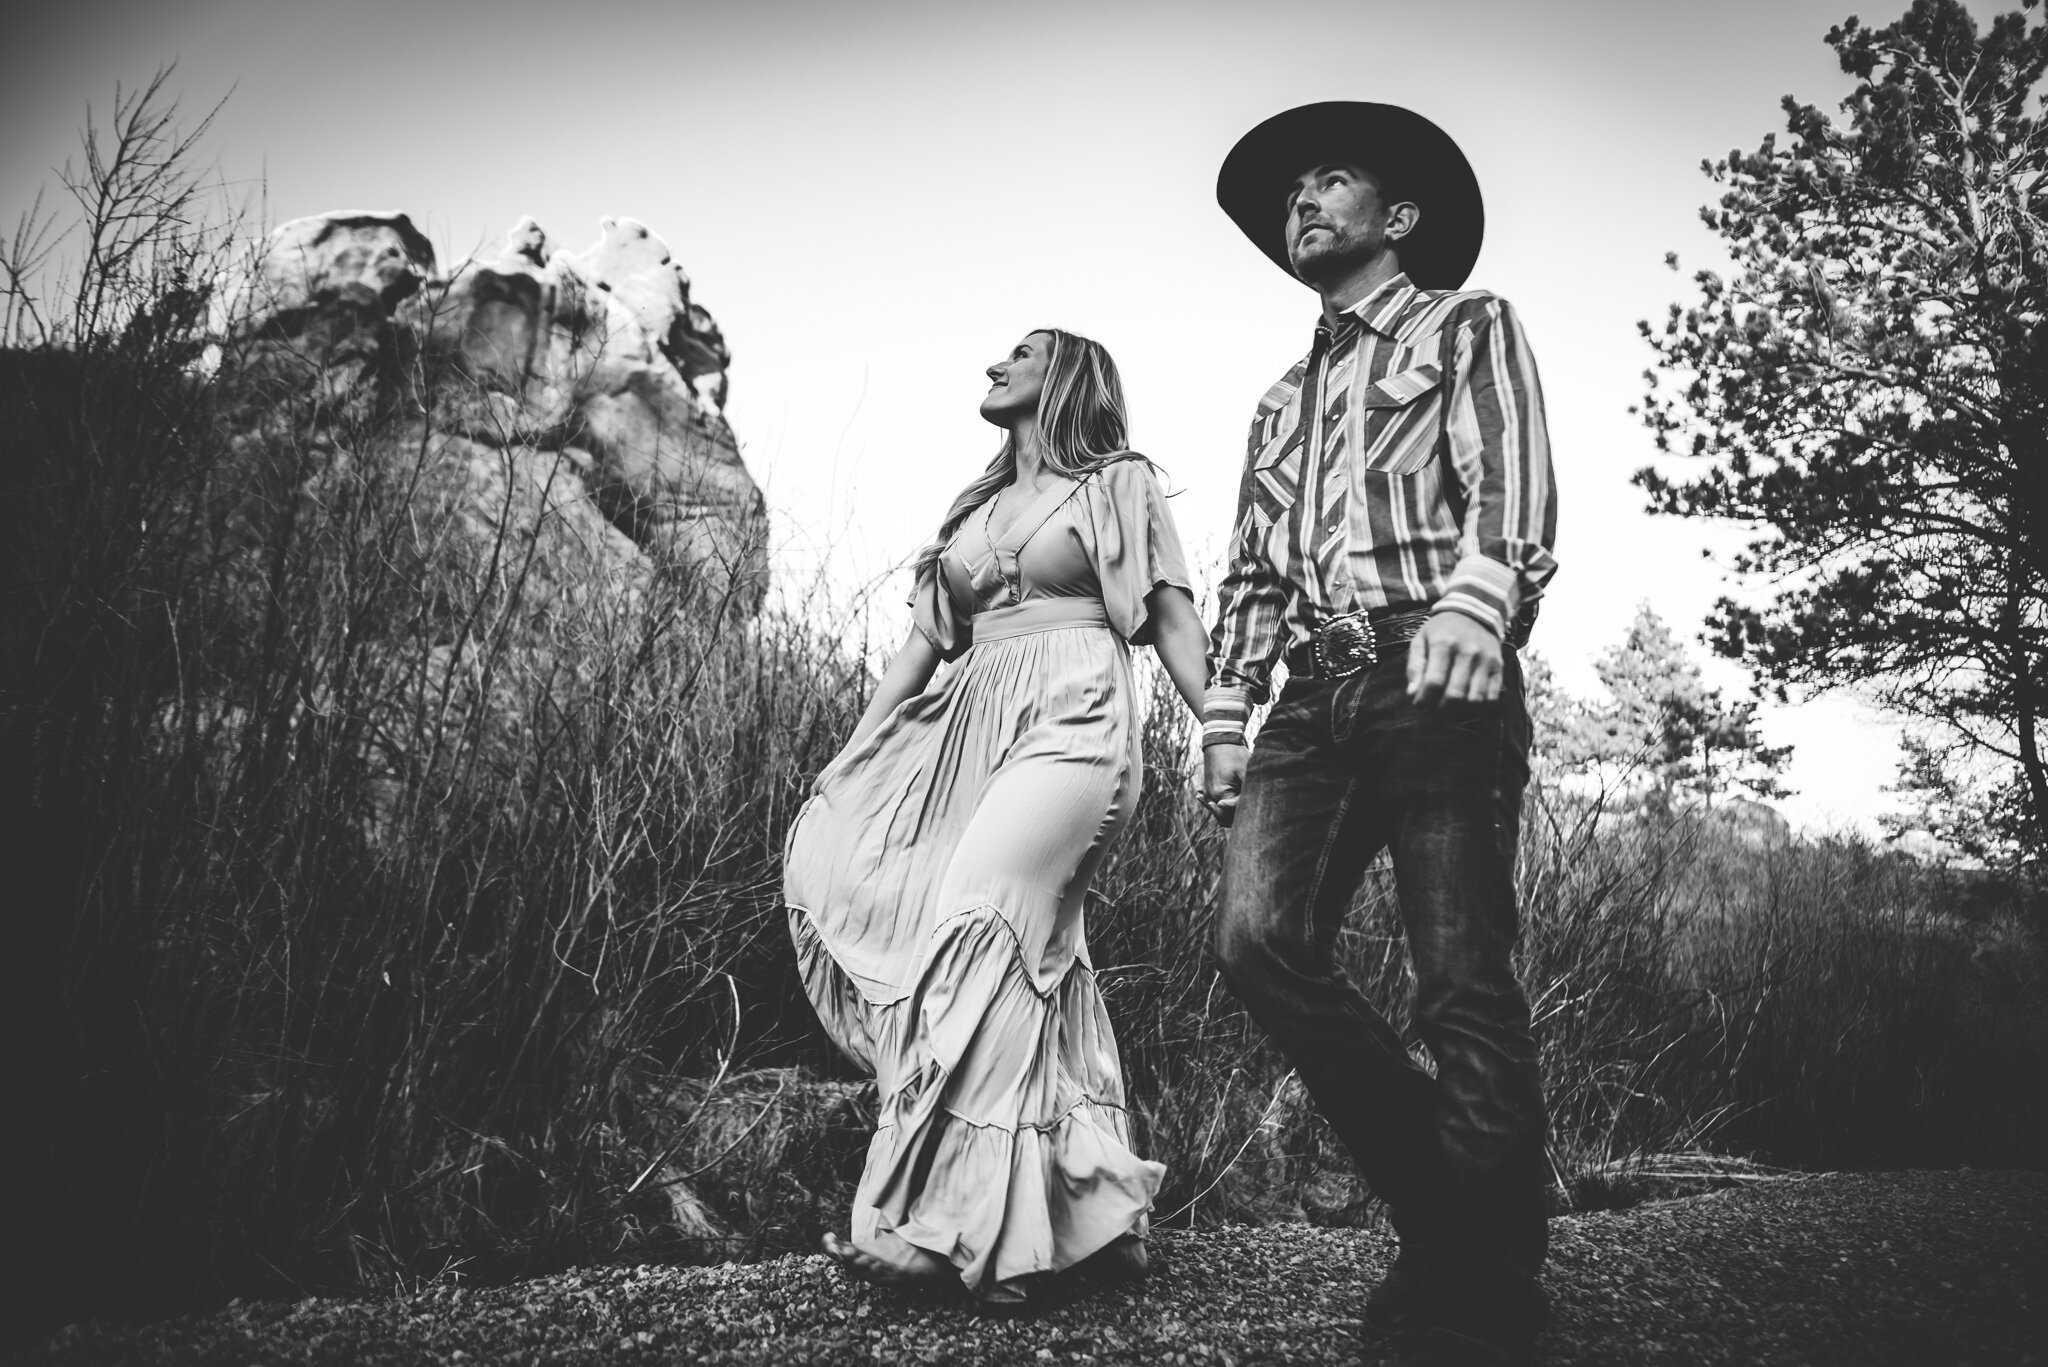 Shelby+and+Brady+Engagement+Session+Cheyenne+Wyoming+Sunset+Water+Fields+Rocks+Nature+Colorado+Photographer+Wild+Prairie+Photography-23-2020.jpeg